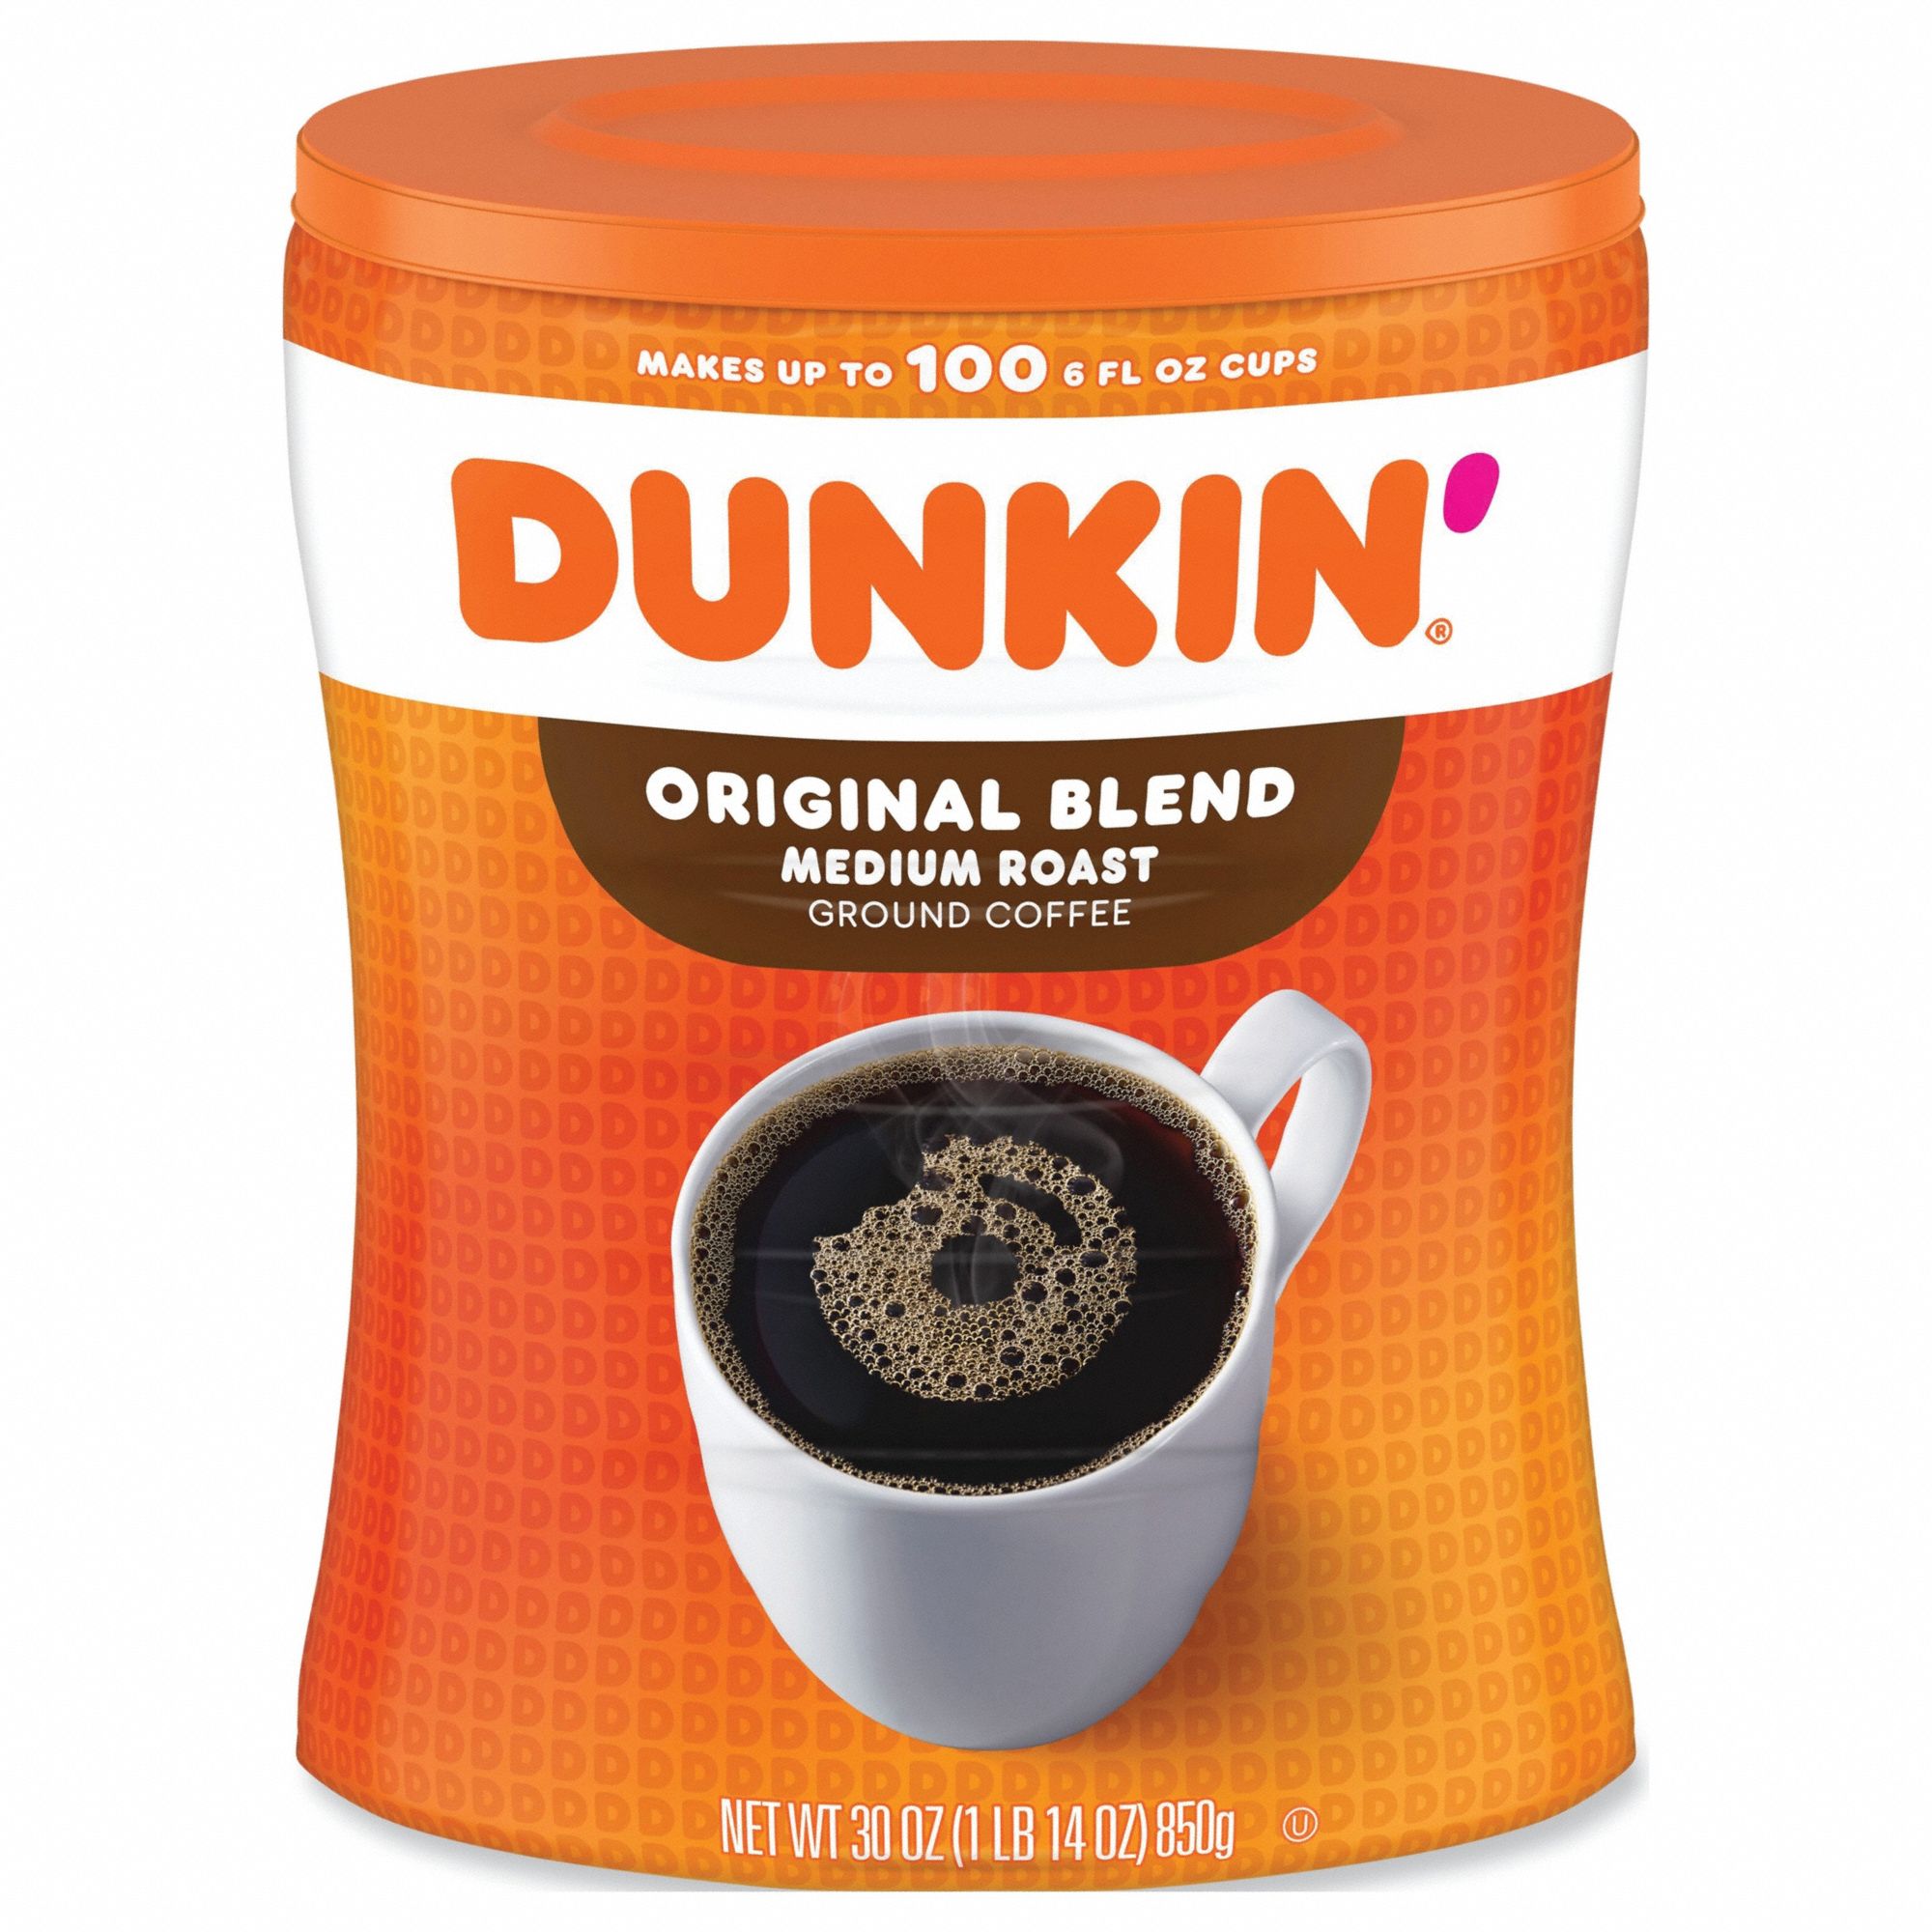 Coffee: Caffeinated, Original Blend, Can, 2 lb Pack Wt, 30 oz Net Wt, Medium, Ground